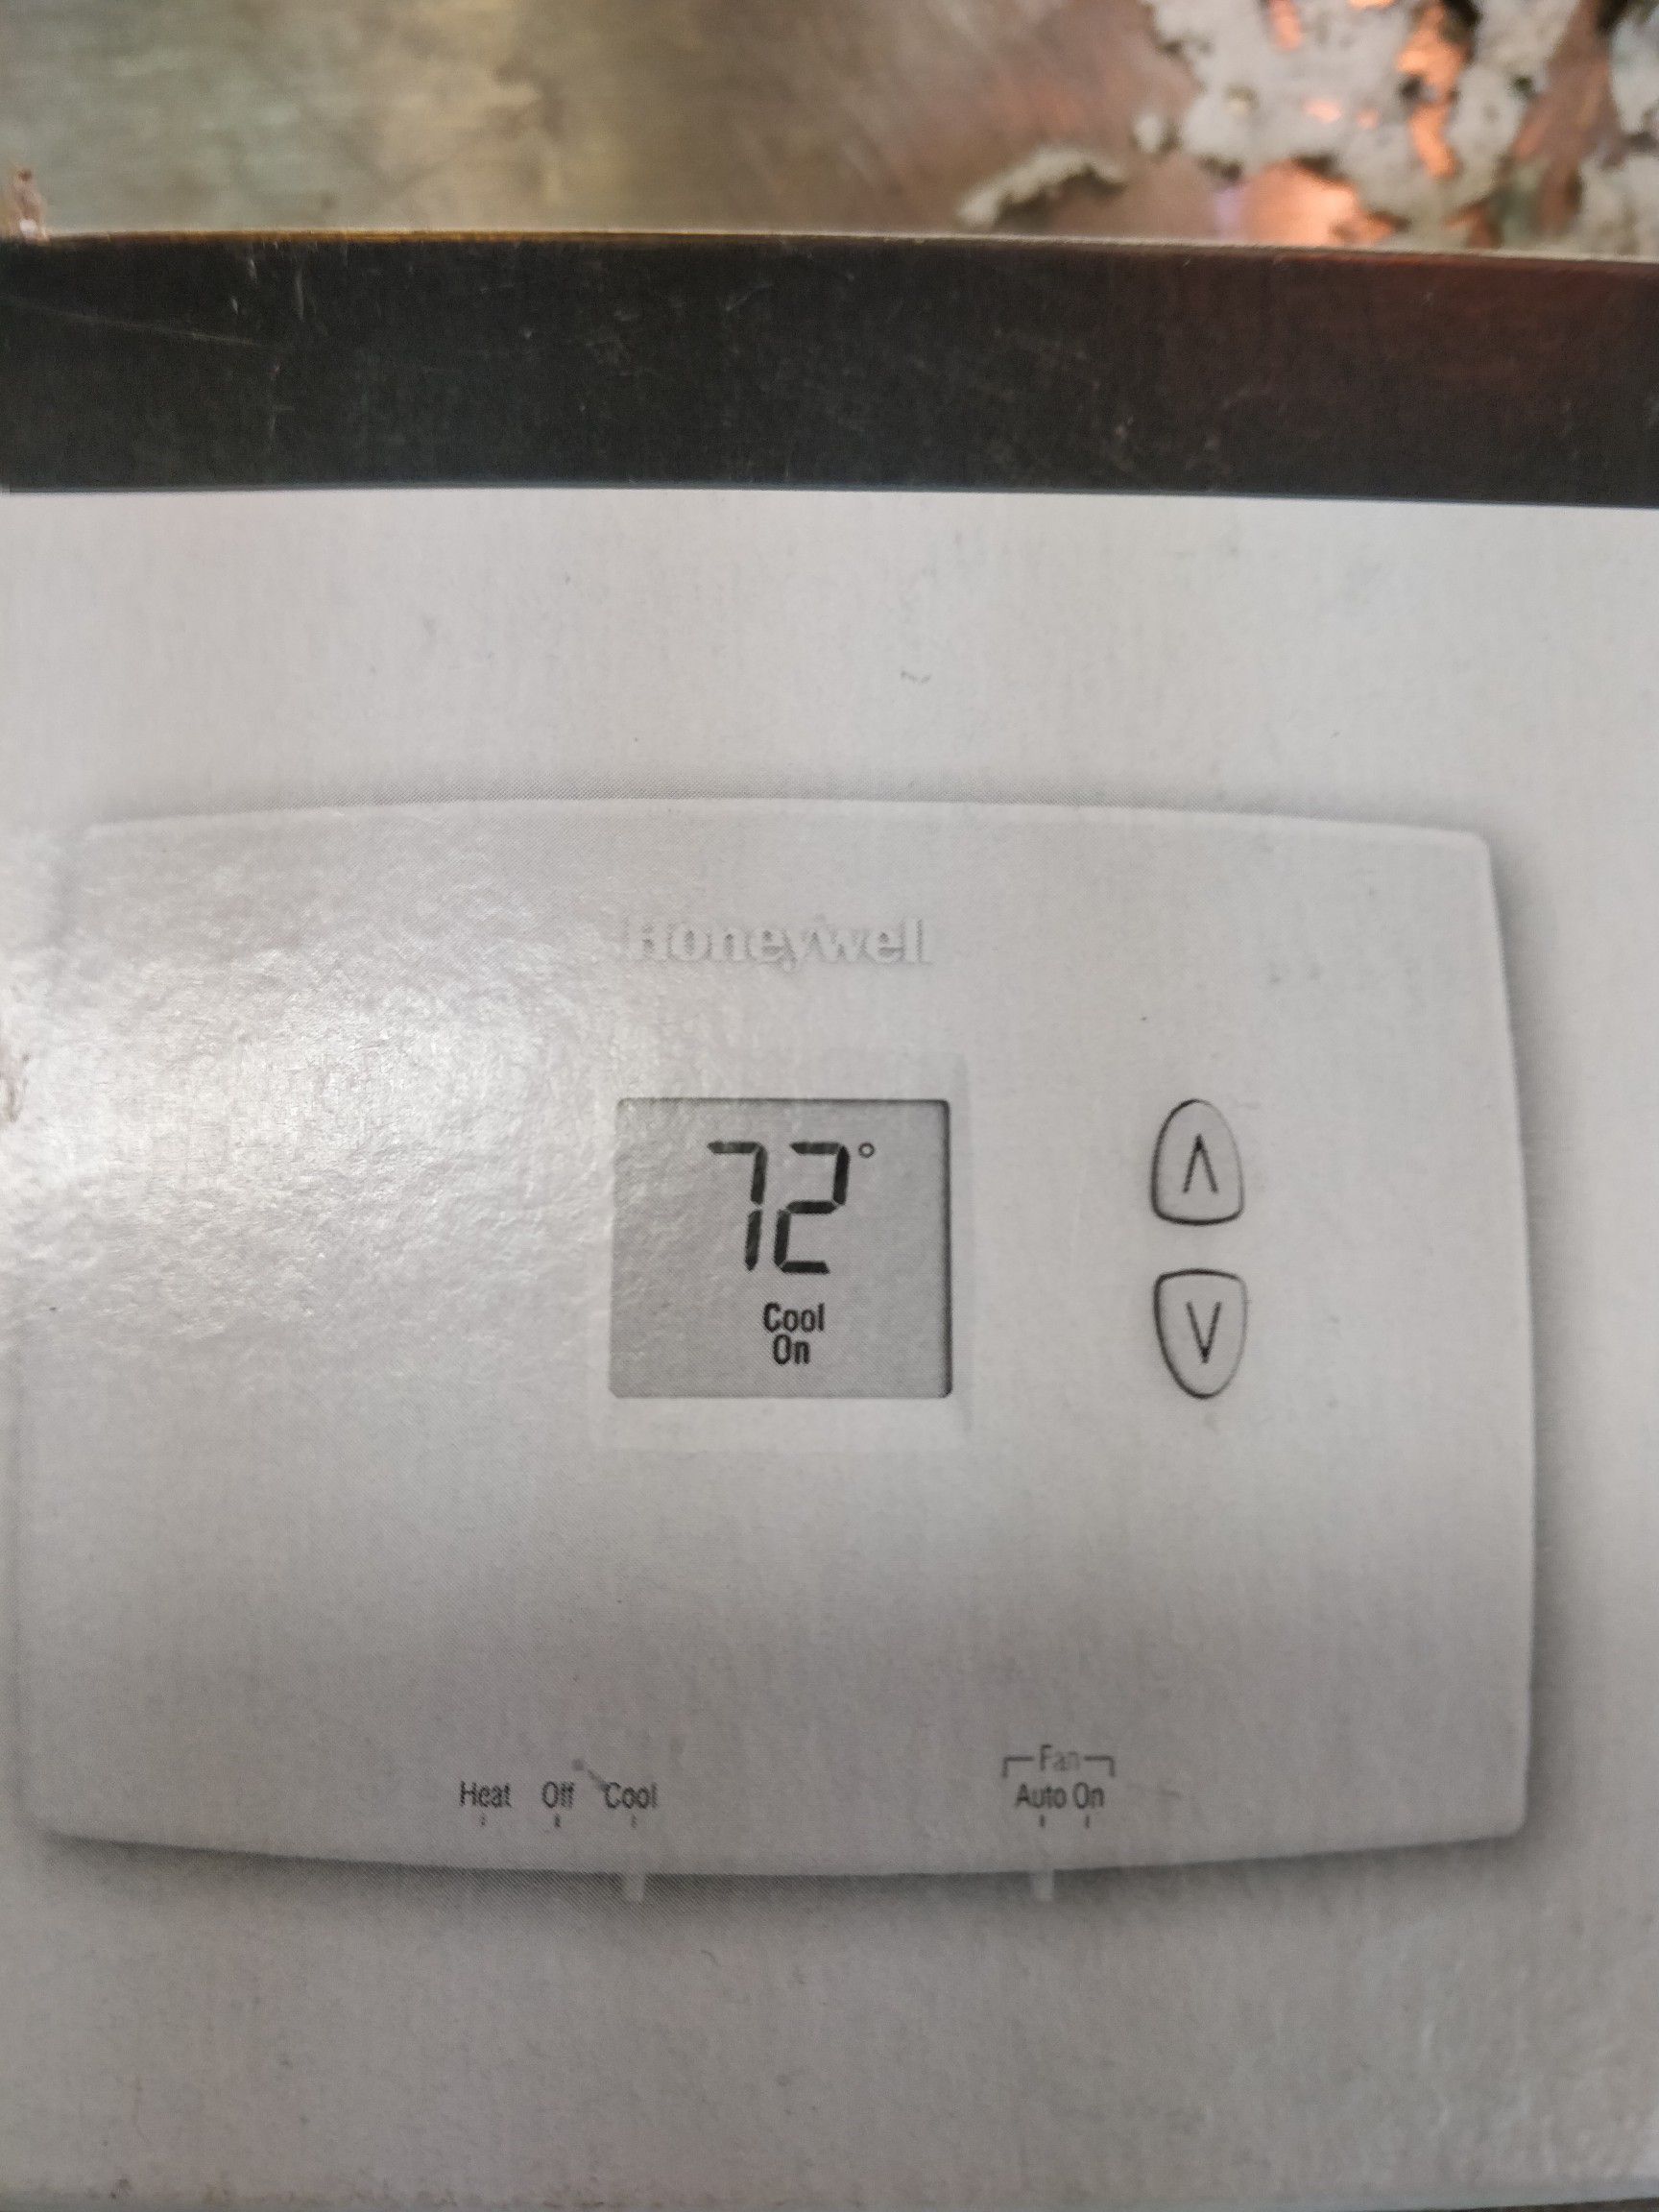 Honeywell pro 1000 thermostat